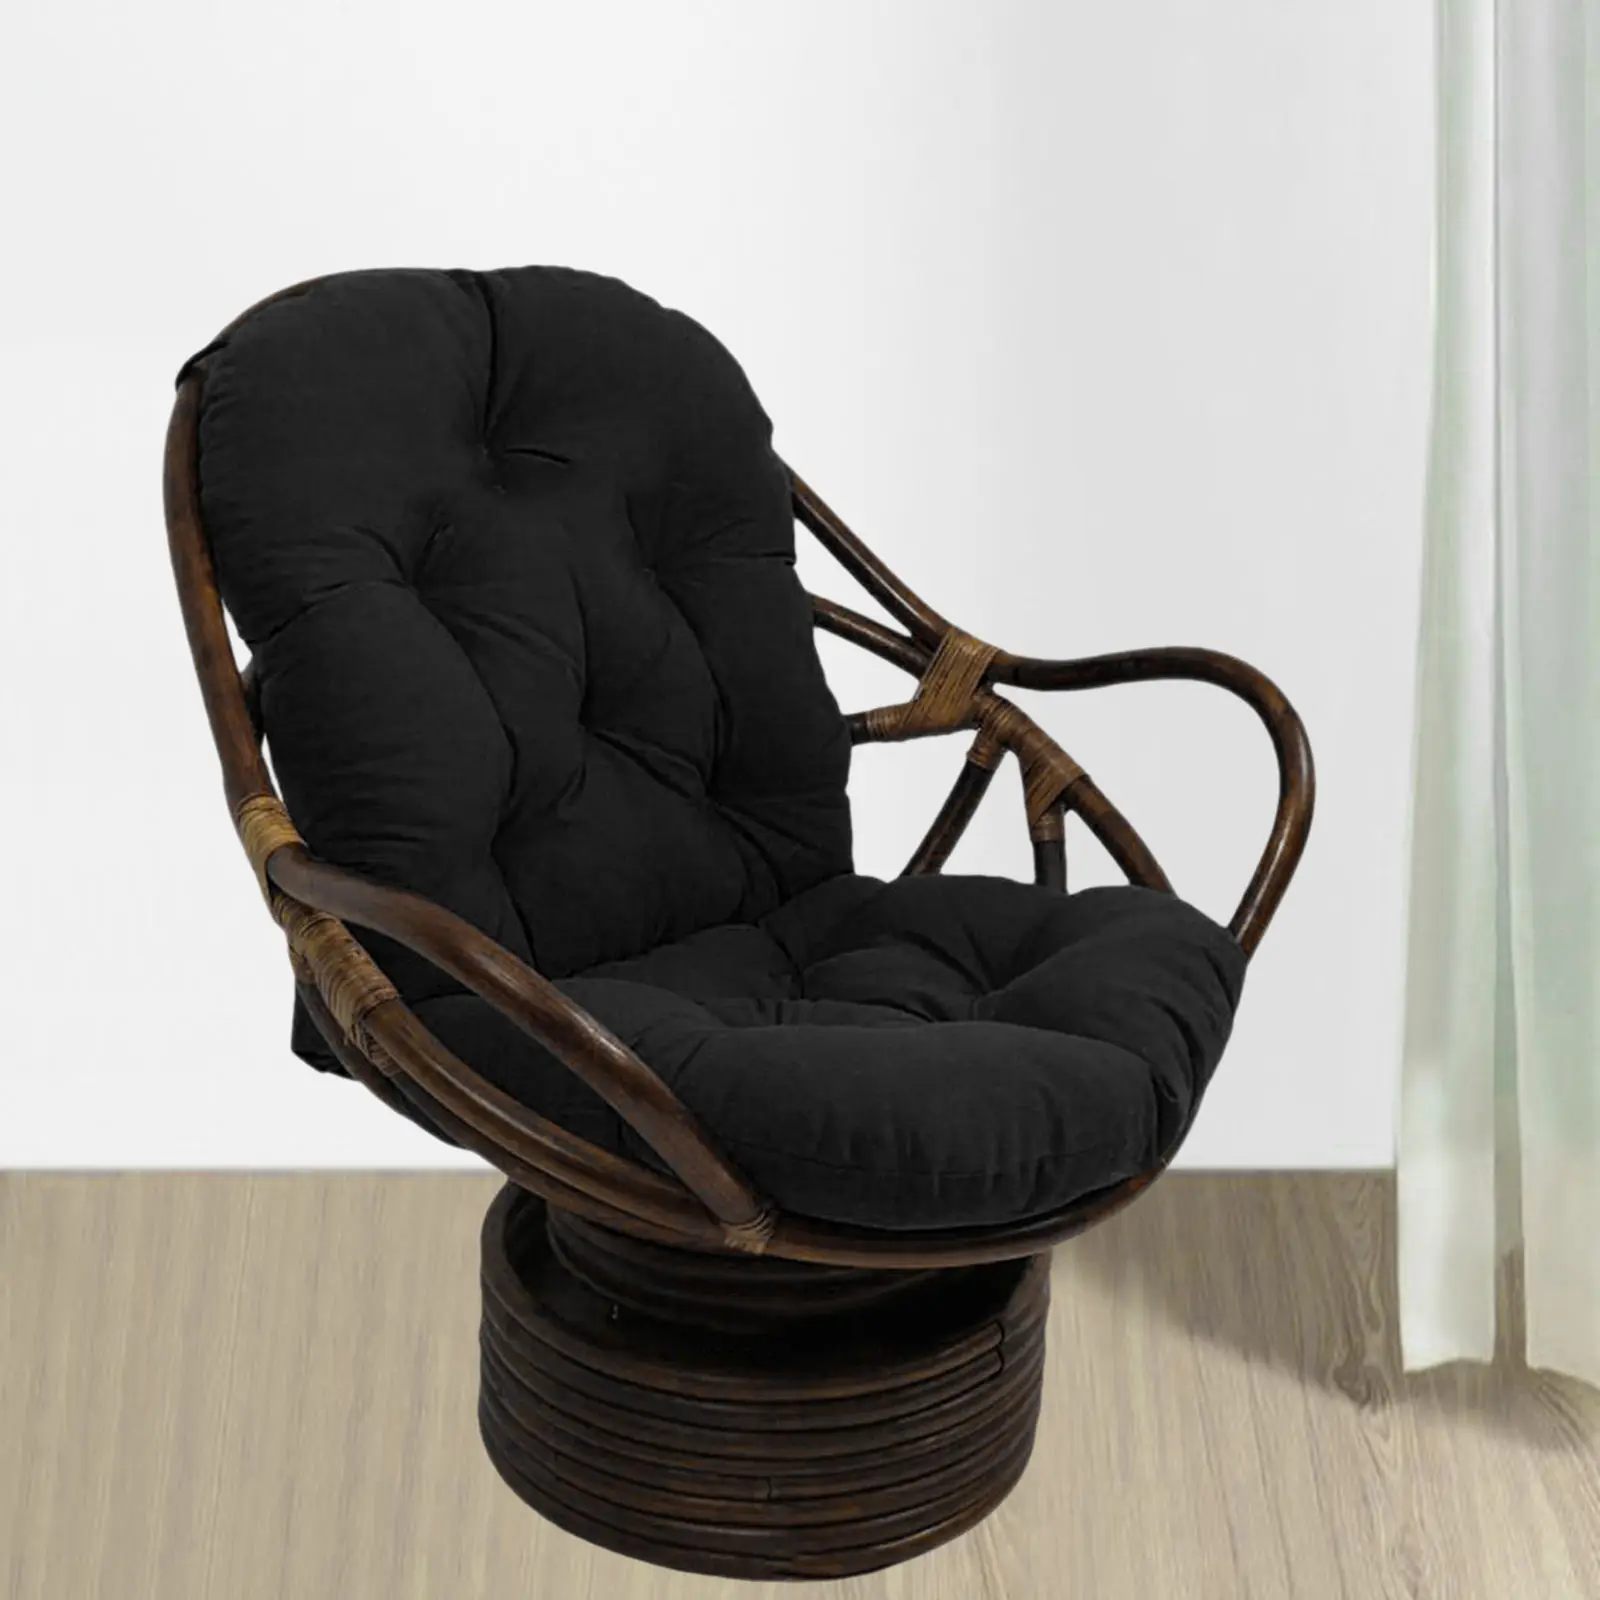 Solid Cushion Mat For Rocking Rattan Chair Thick Garden Wicker Swivel Rocker Cushion Home Furniture Seat Pad